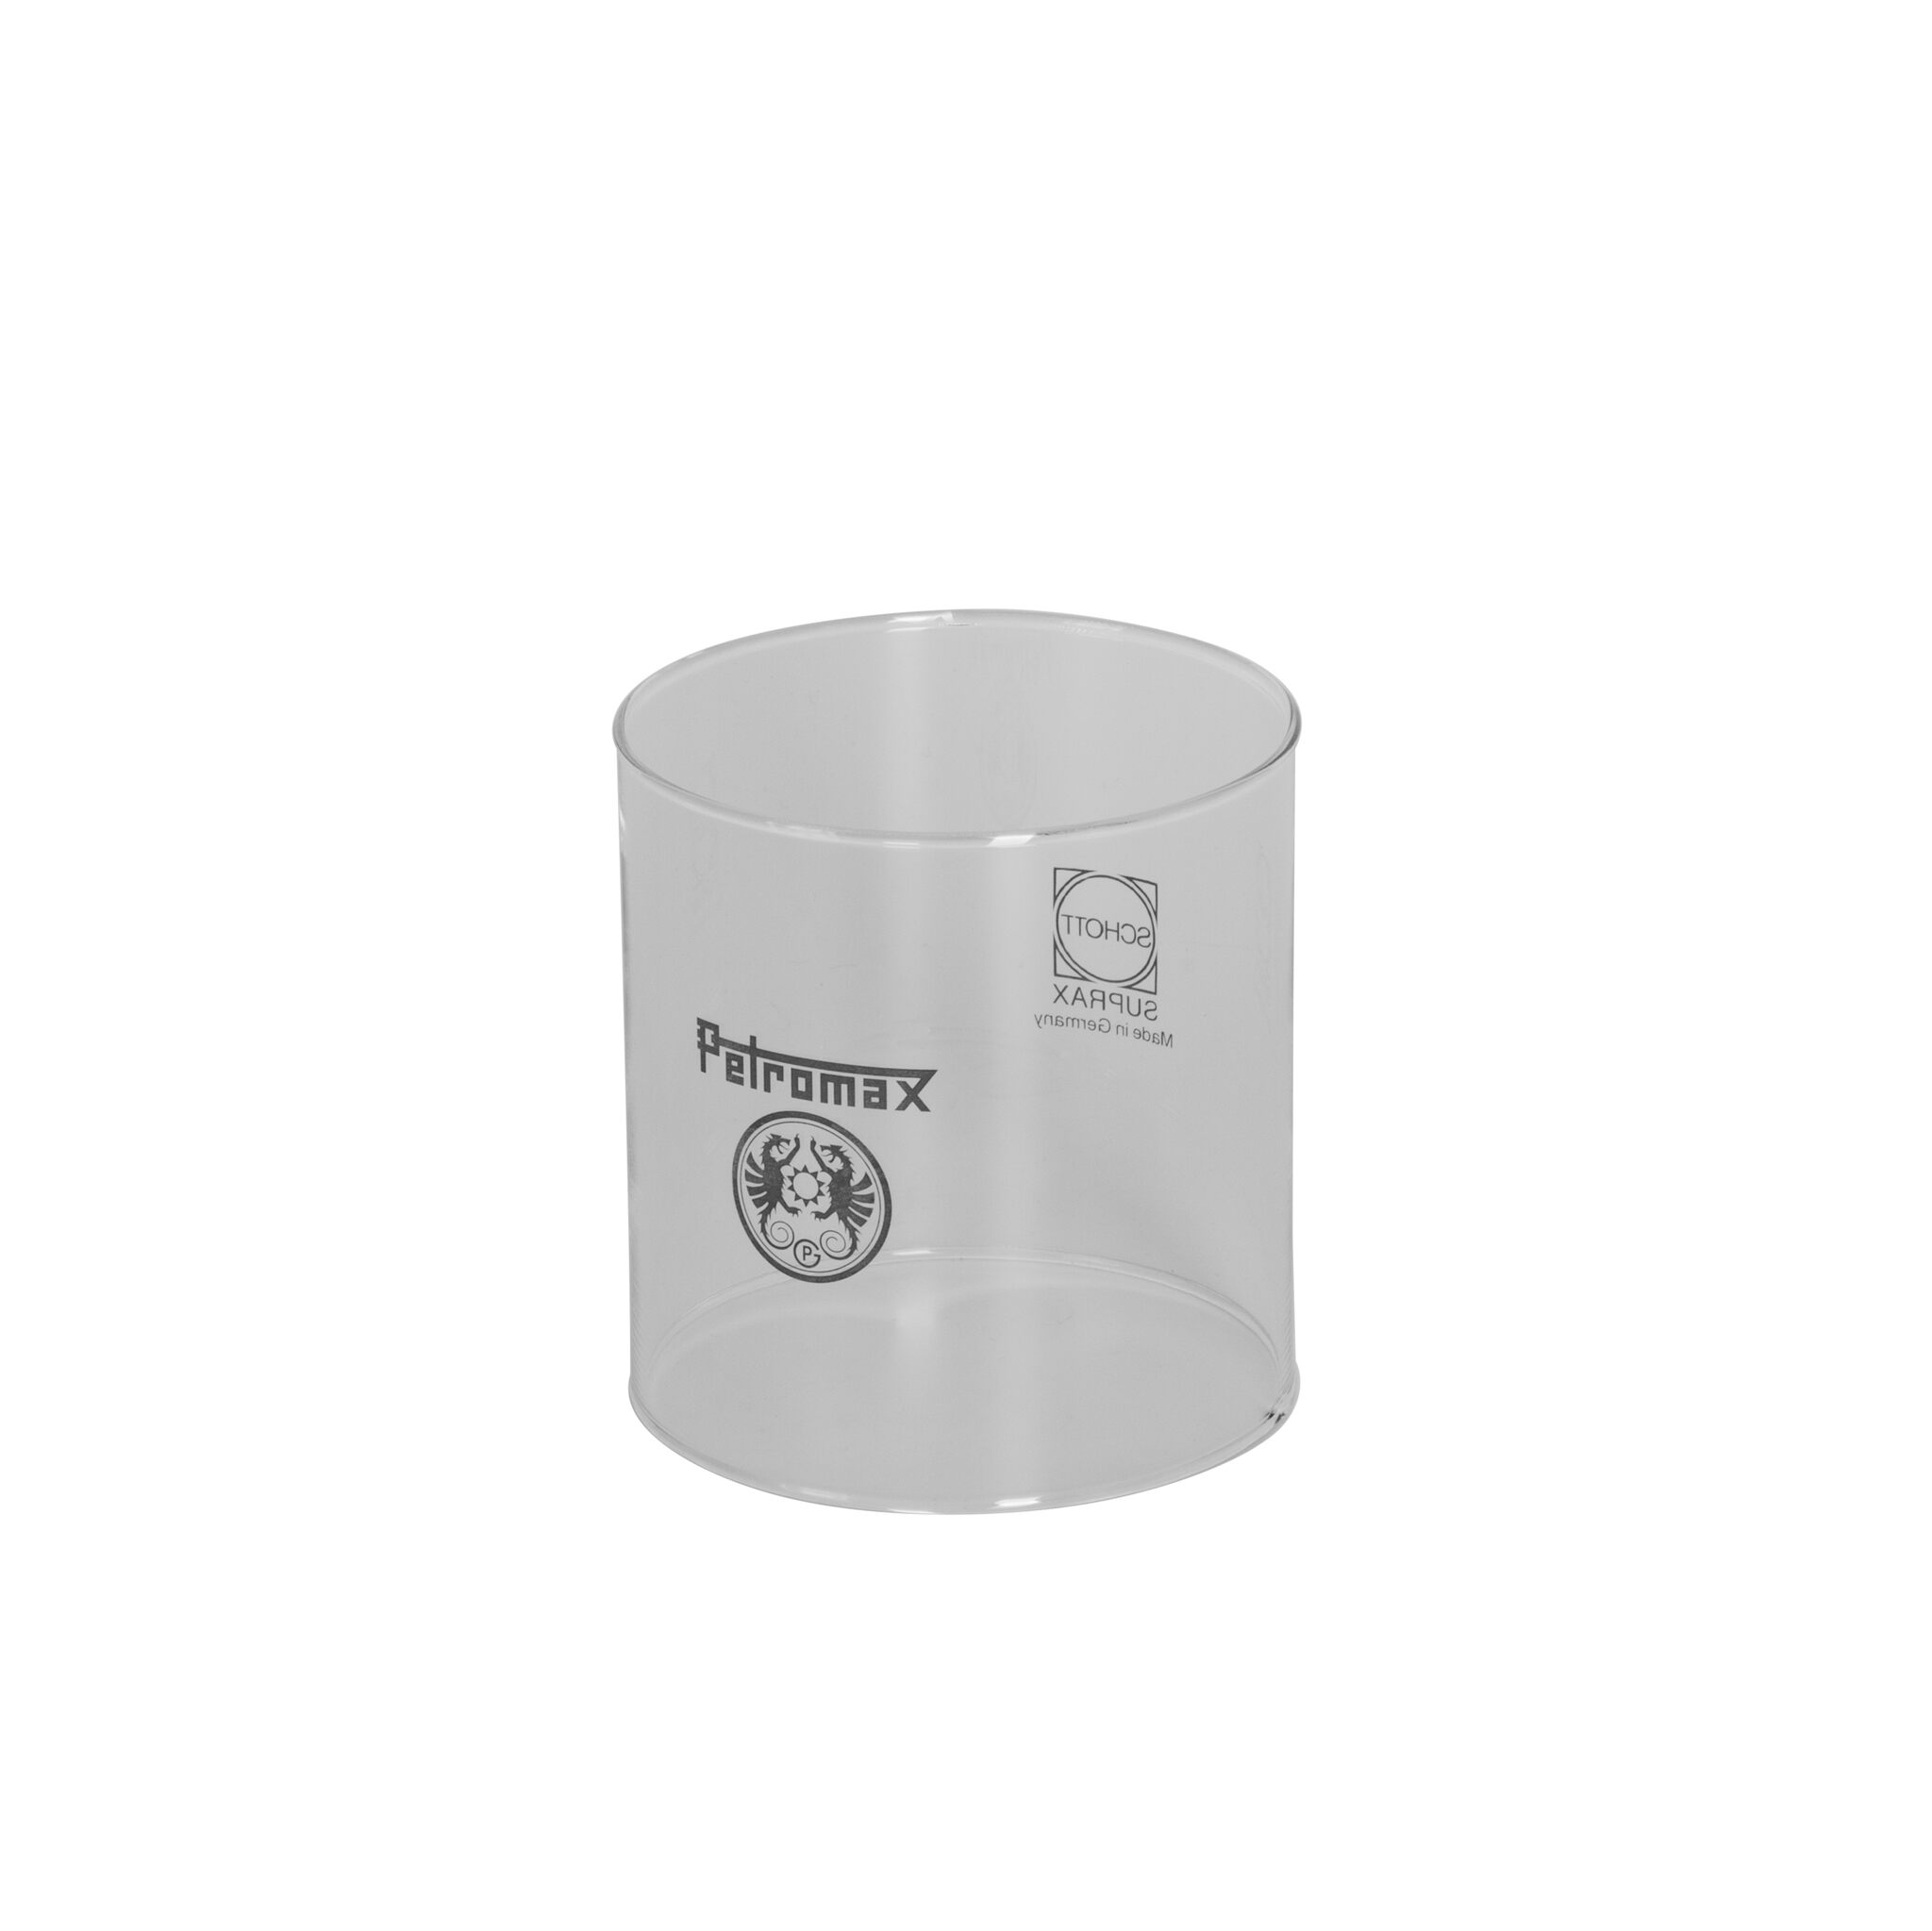 Glaszylinder für Petromax Petroleumlampe 500HK